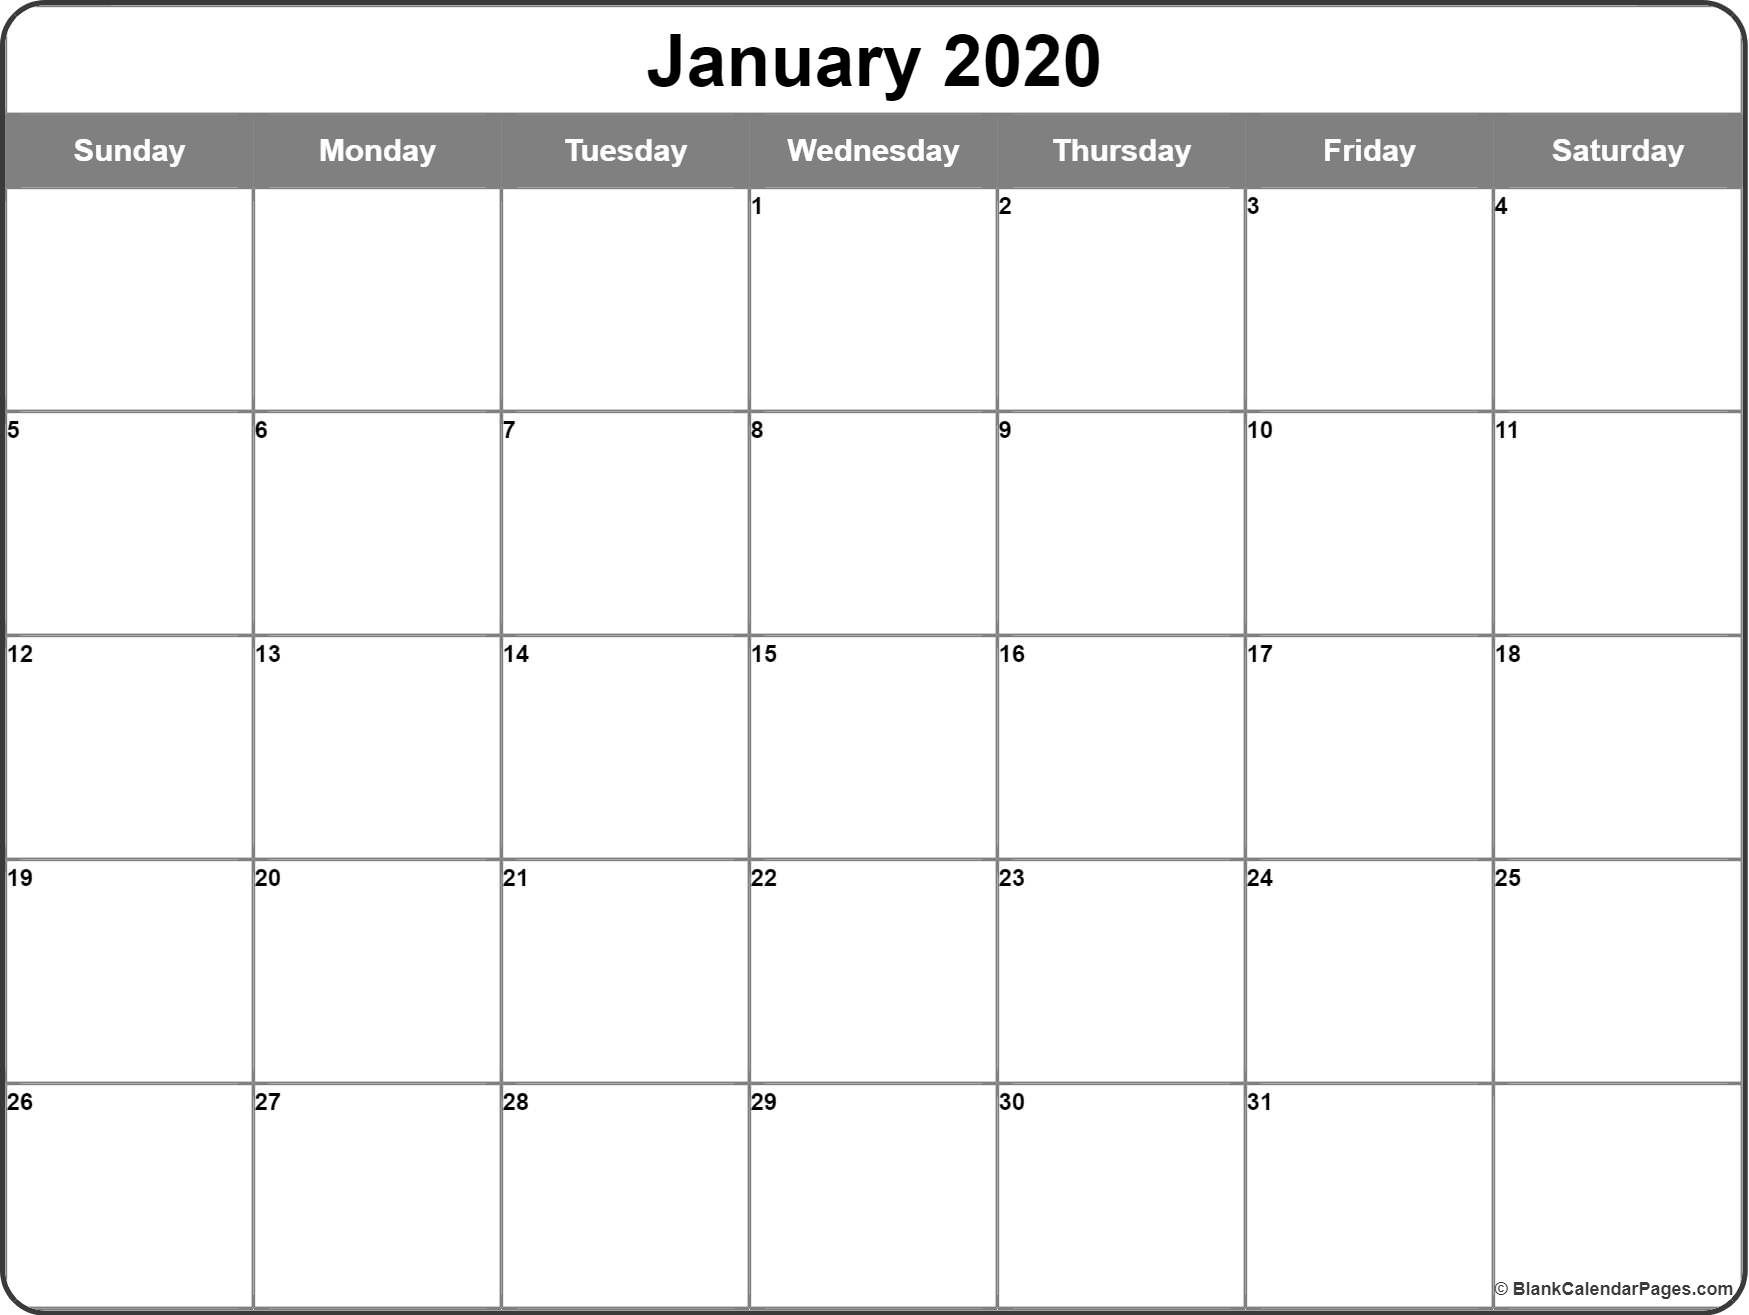 January 2020 Calendar | Free Printable Monthly Calendars for 2020 Printable Calender Imom